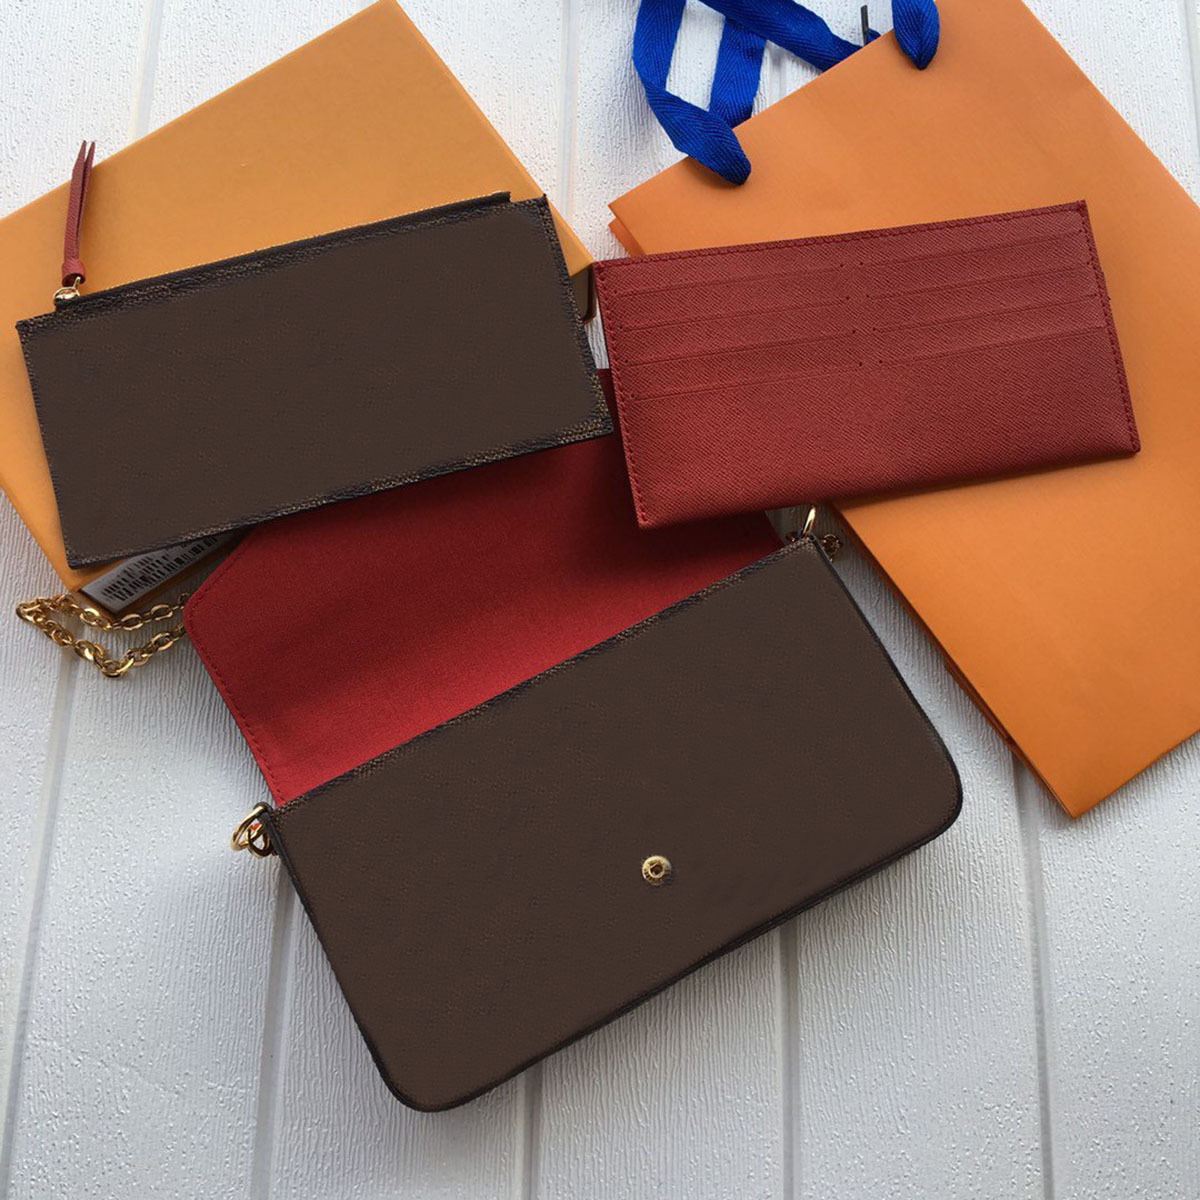 Handbag Felicie Purse Designers Luxurys Handbags Lady's Evening Bags 3 in 1 Purses Shoulder Bag Gift Box Packing